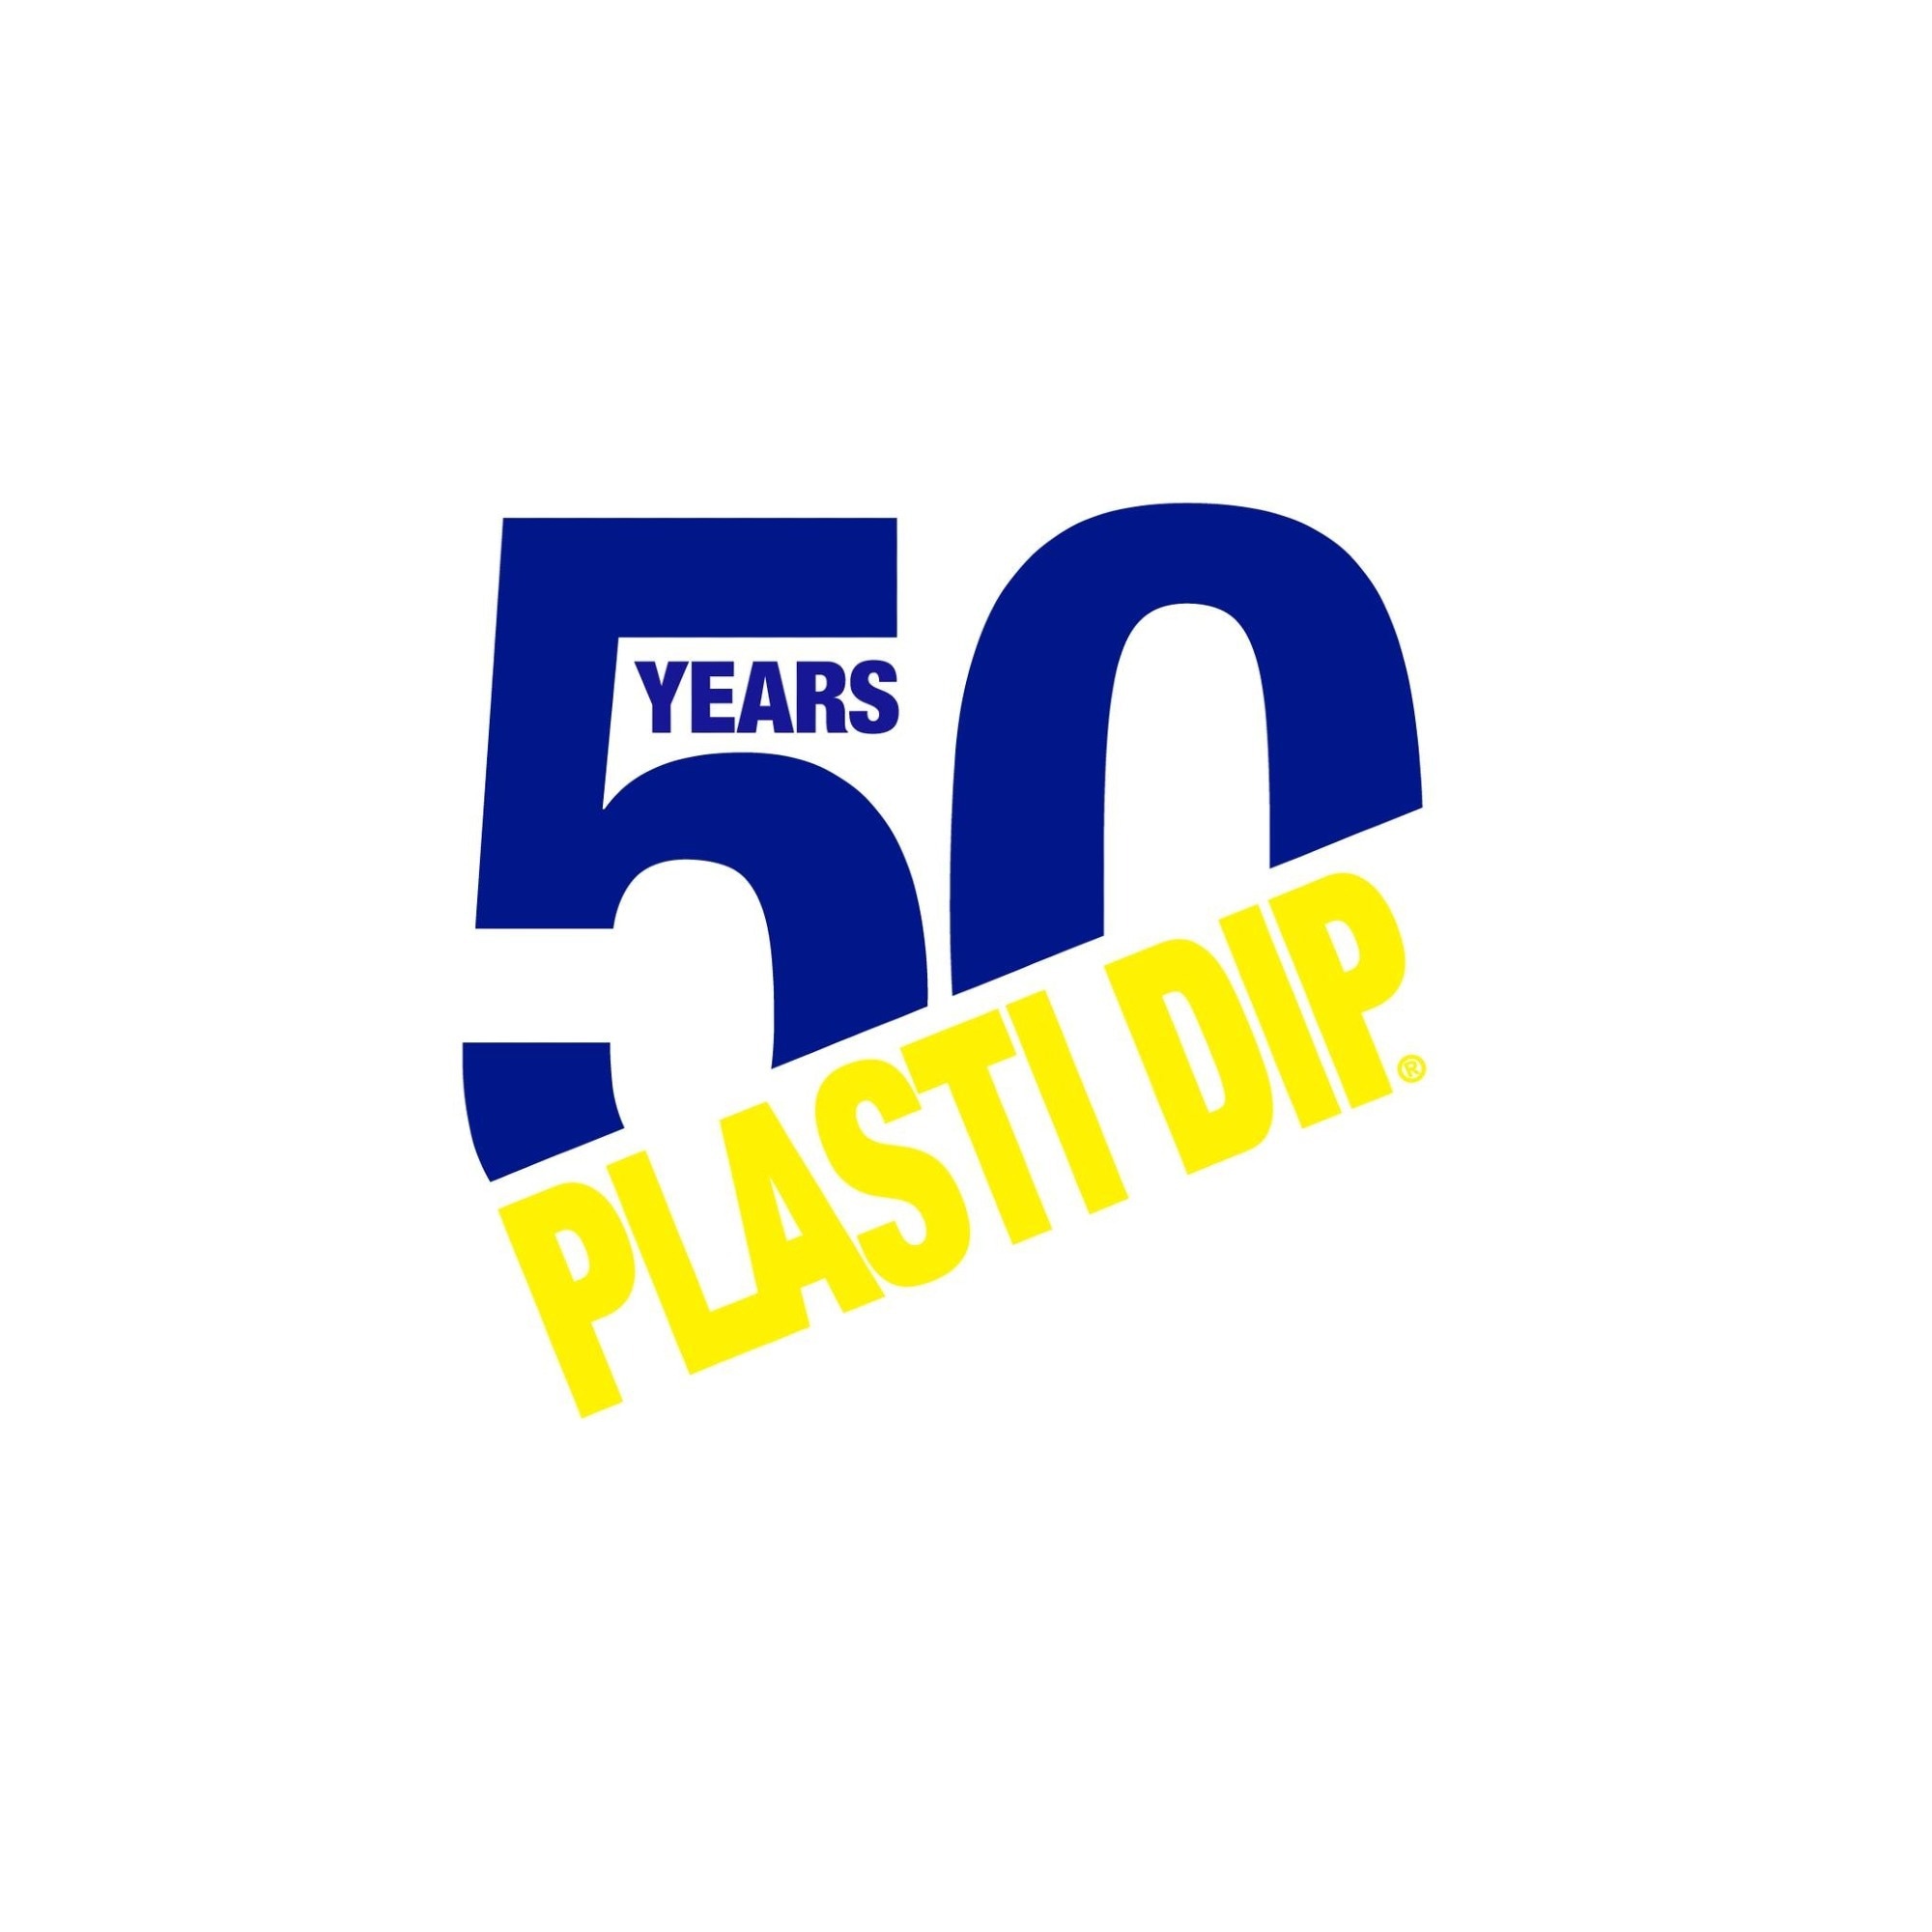 Plasti Dip International